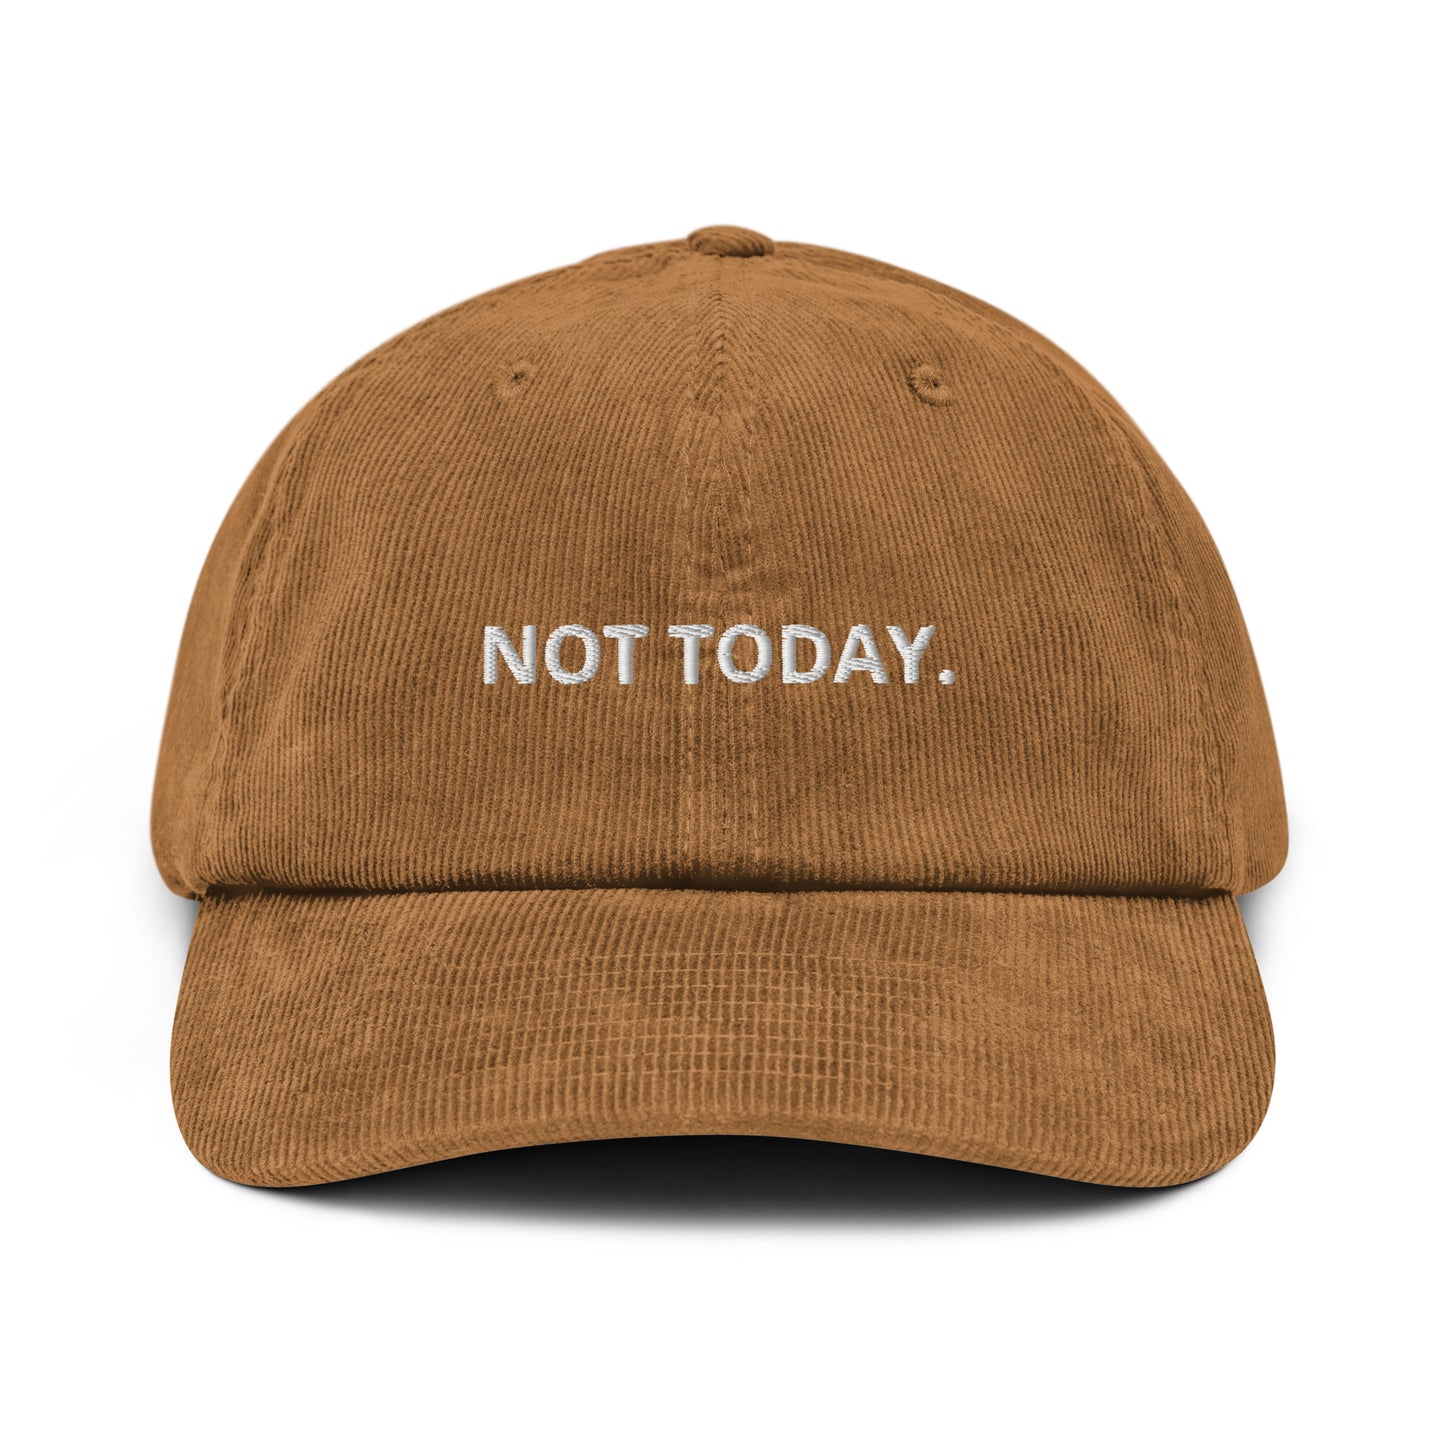 NOT TODAY. Cord-Cap